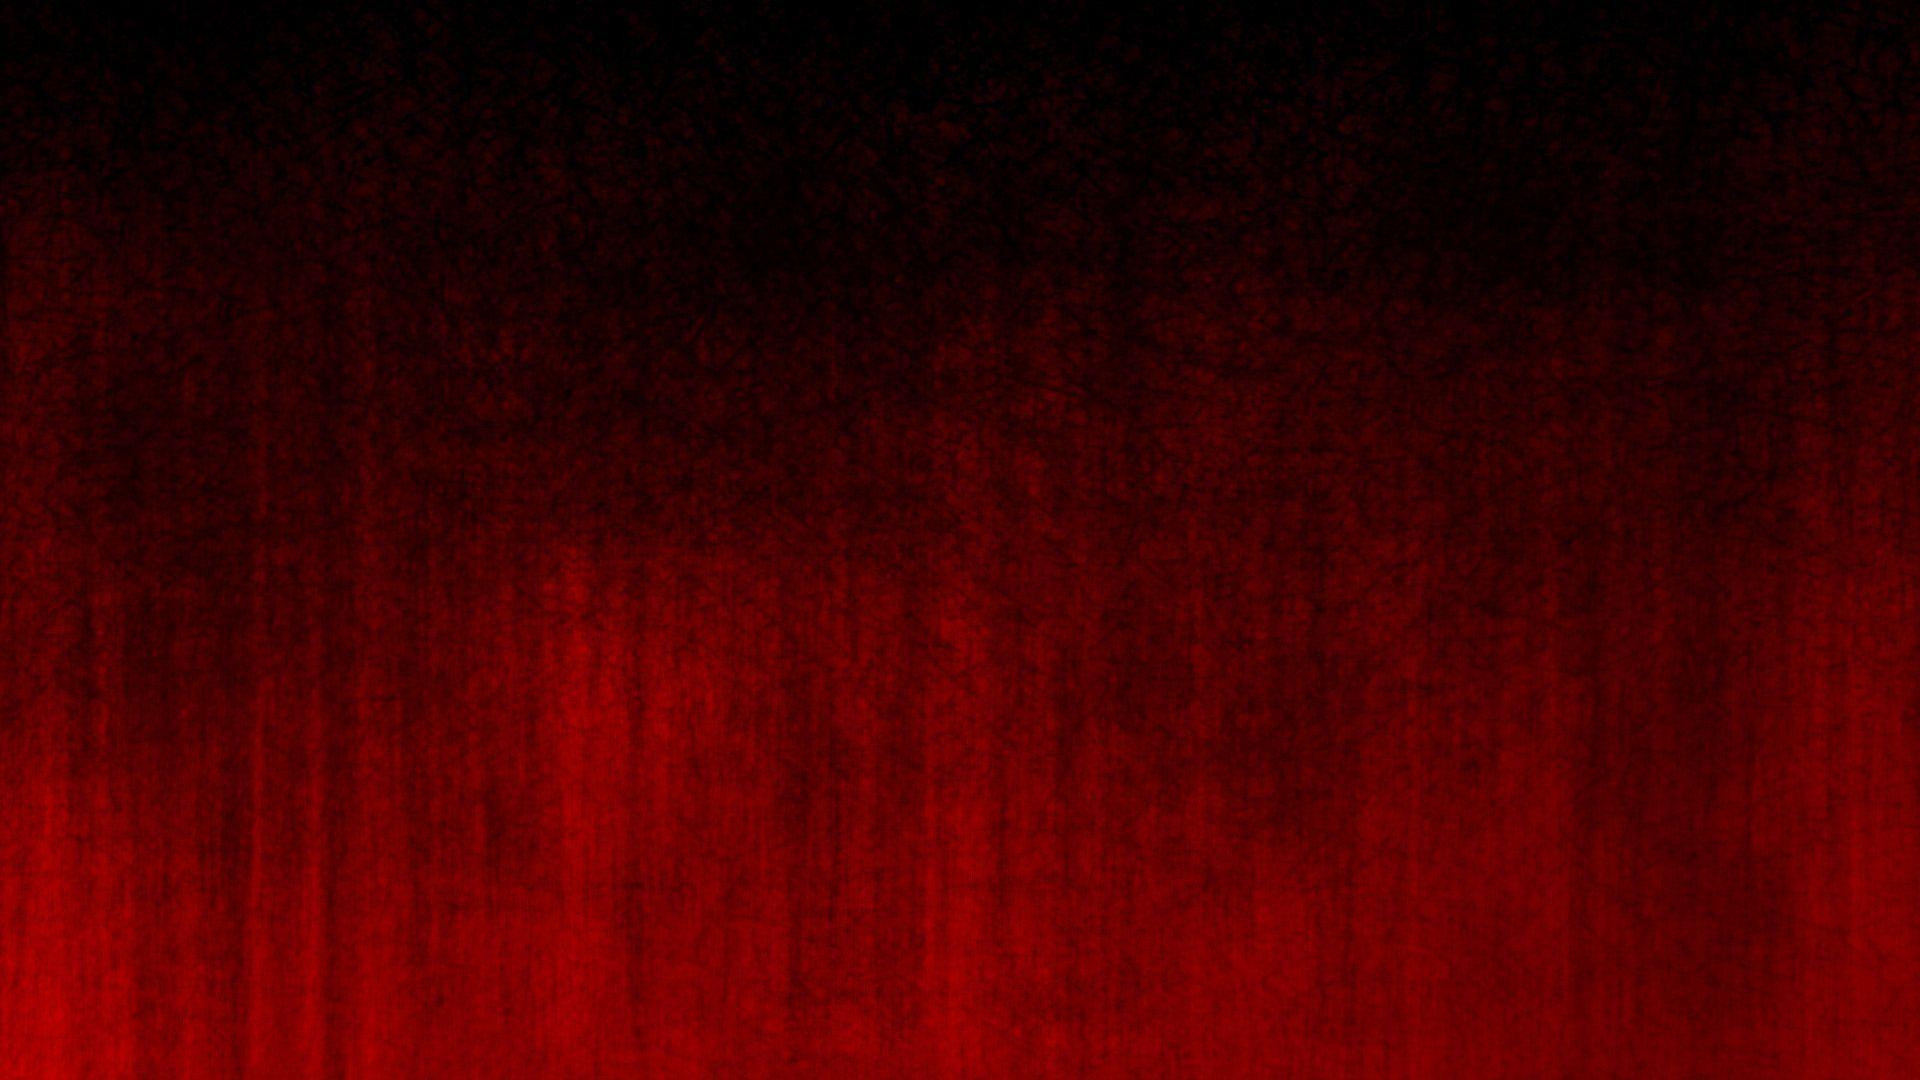 Red Grunge Wallpaper 50 images